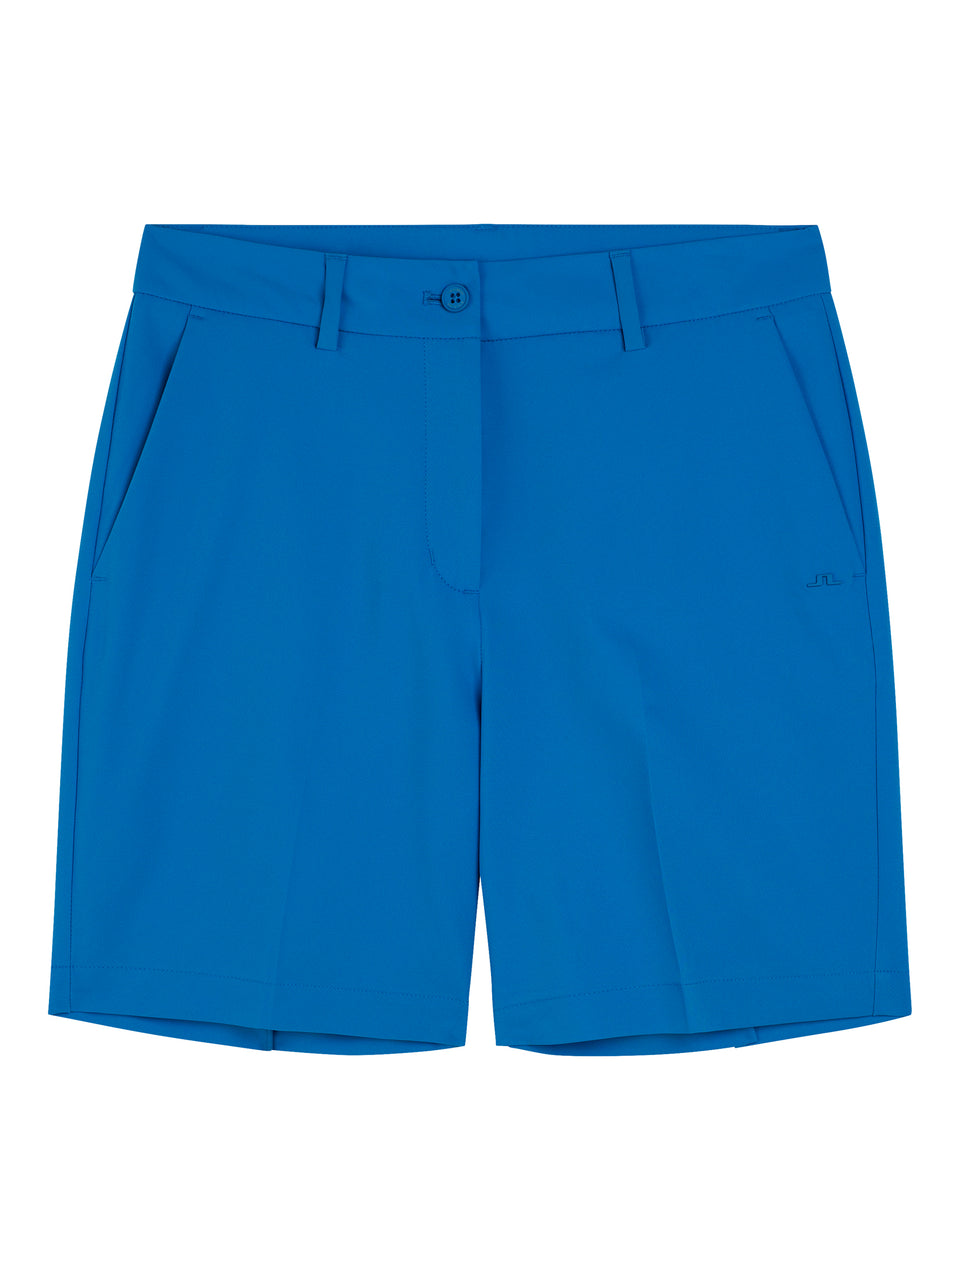 Gwen Long Shorts / Brilliant Blue